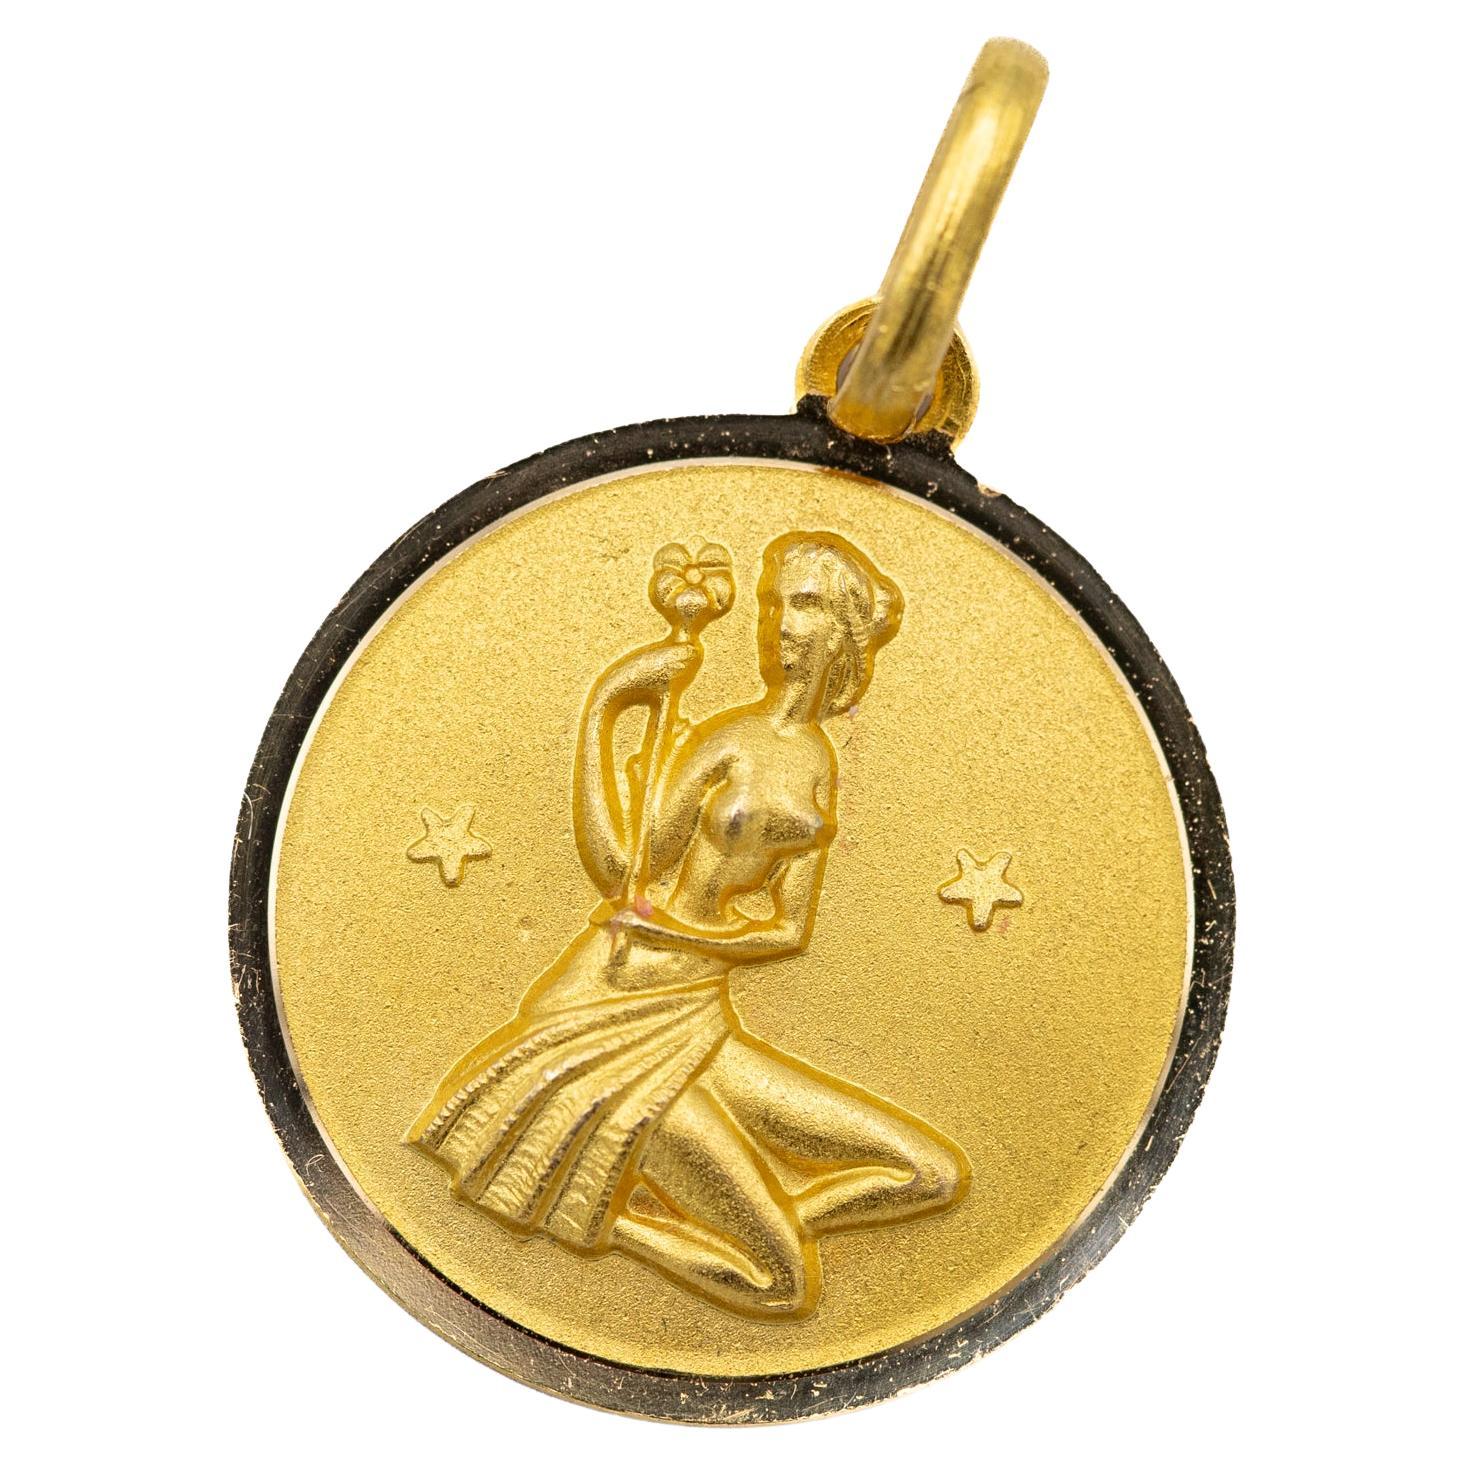 Vintage 18k zodiac charm pendant - Virgo charm - solid yellow gold